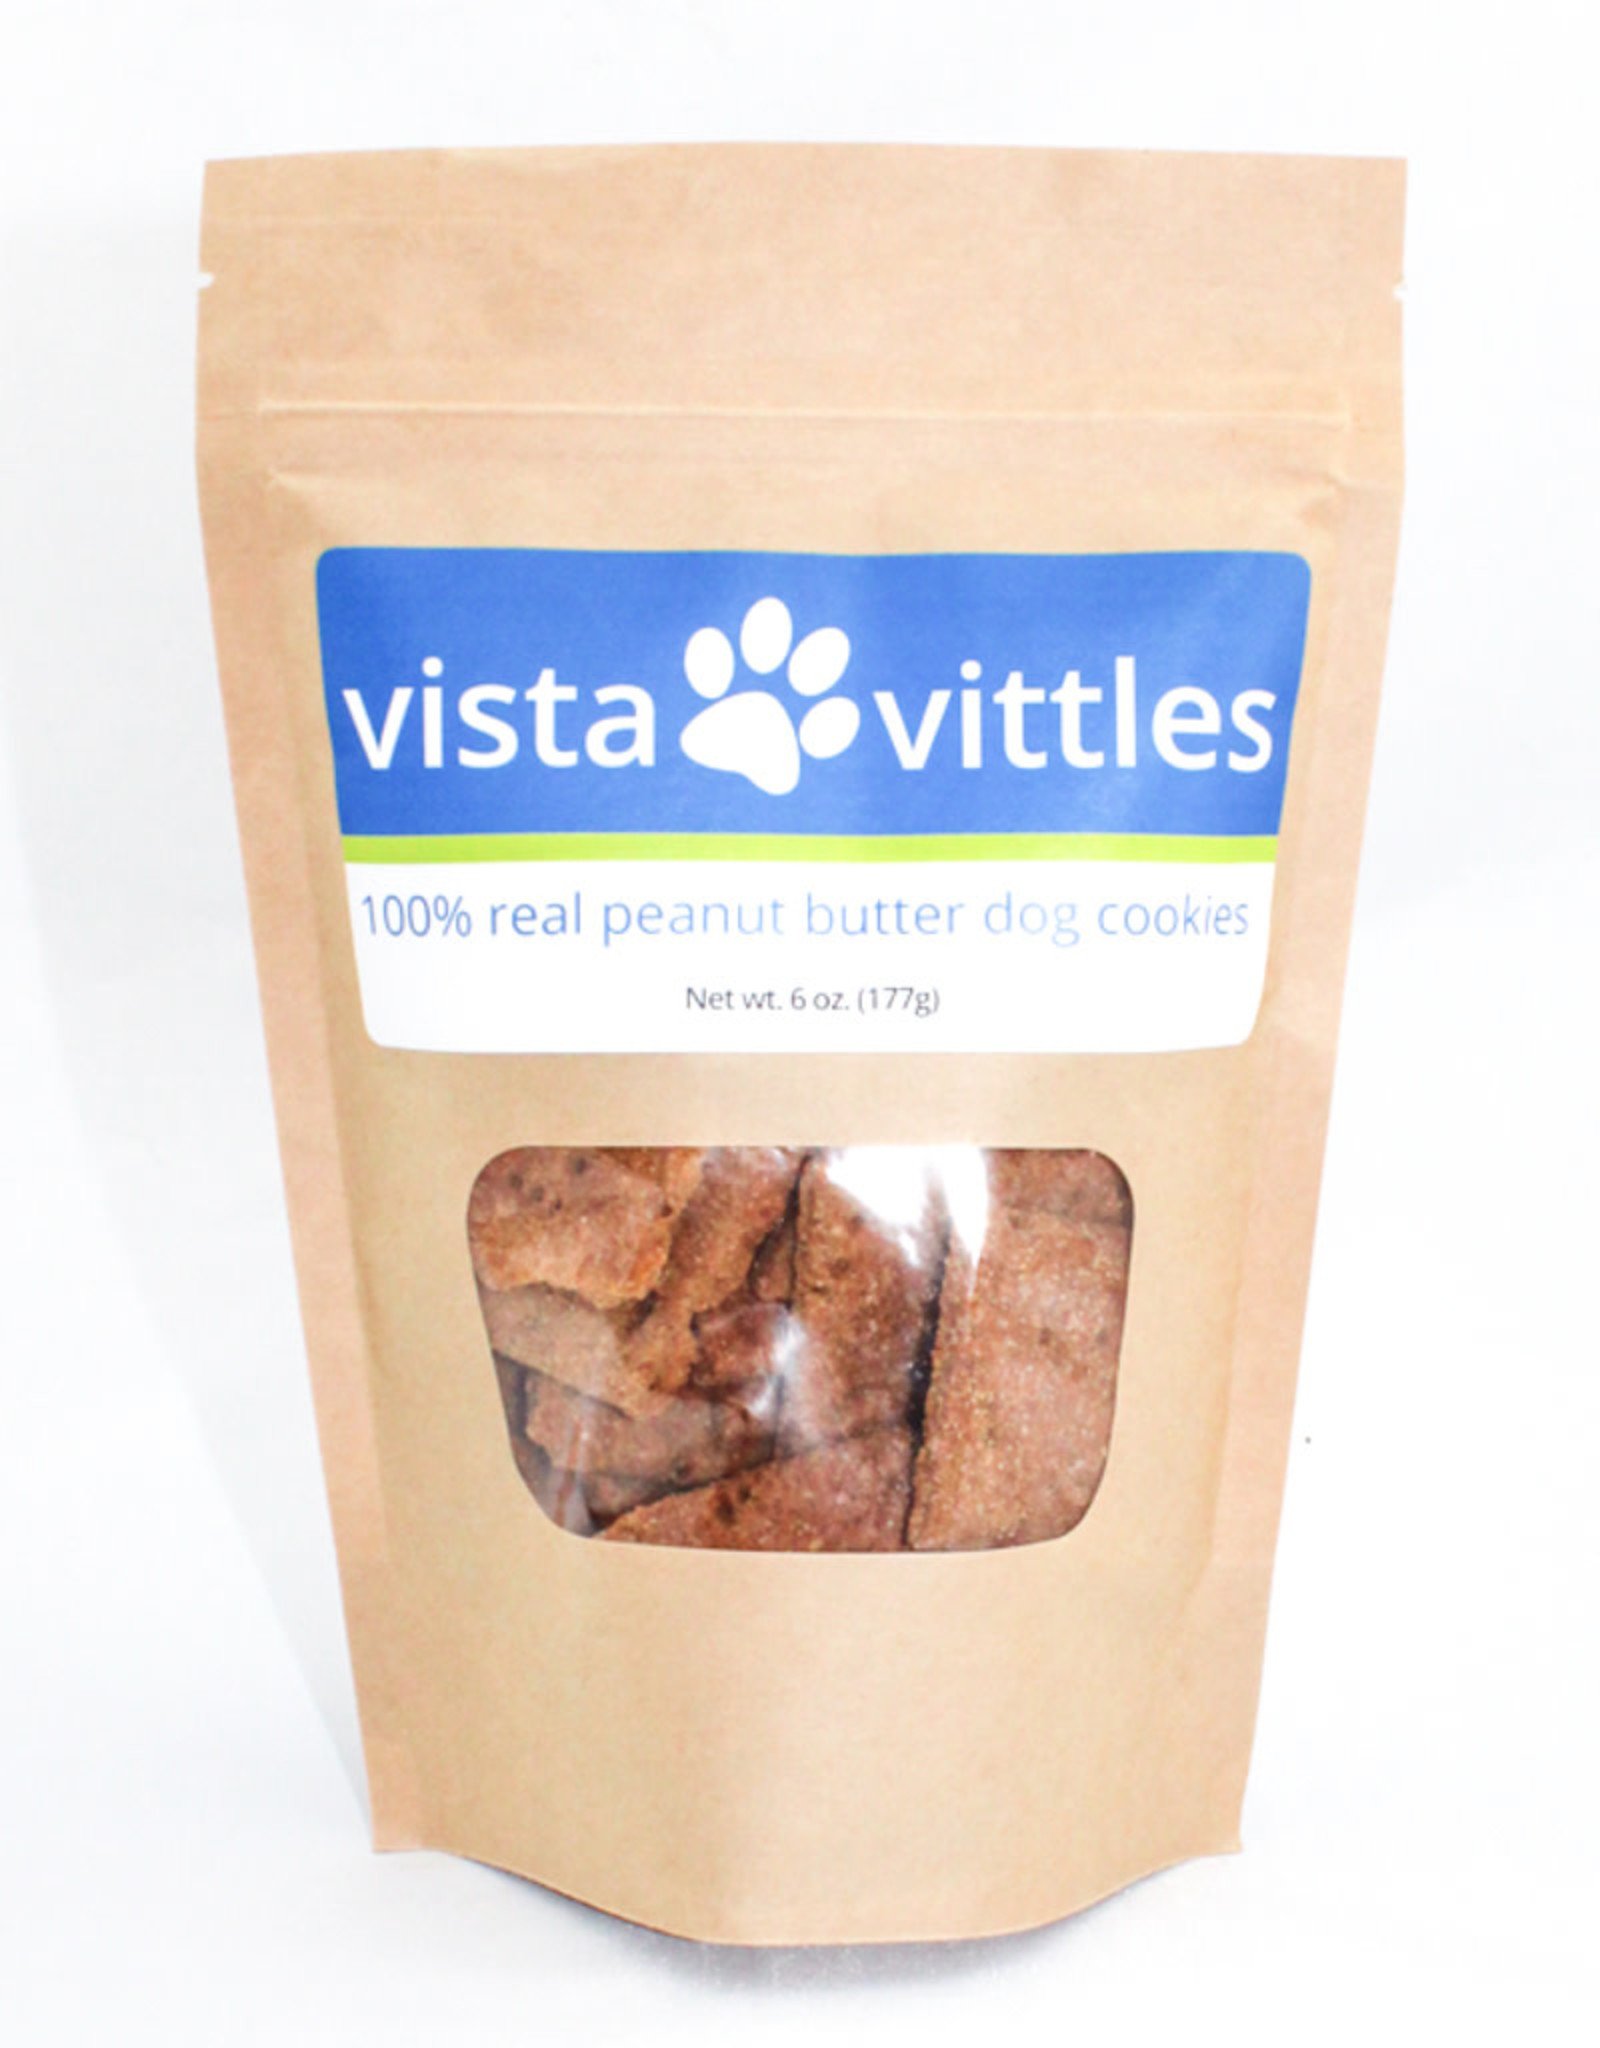 Ventures Vista Vittles dog treats